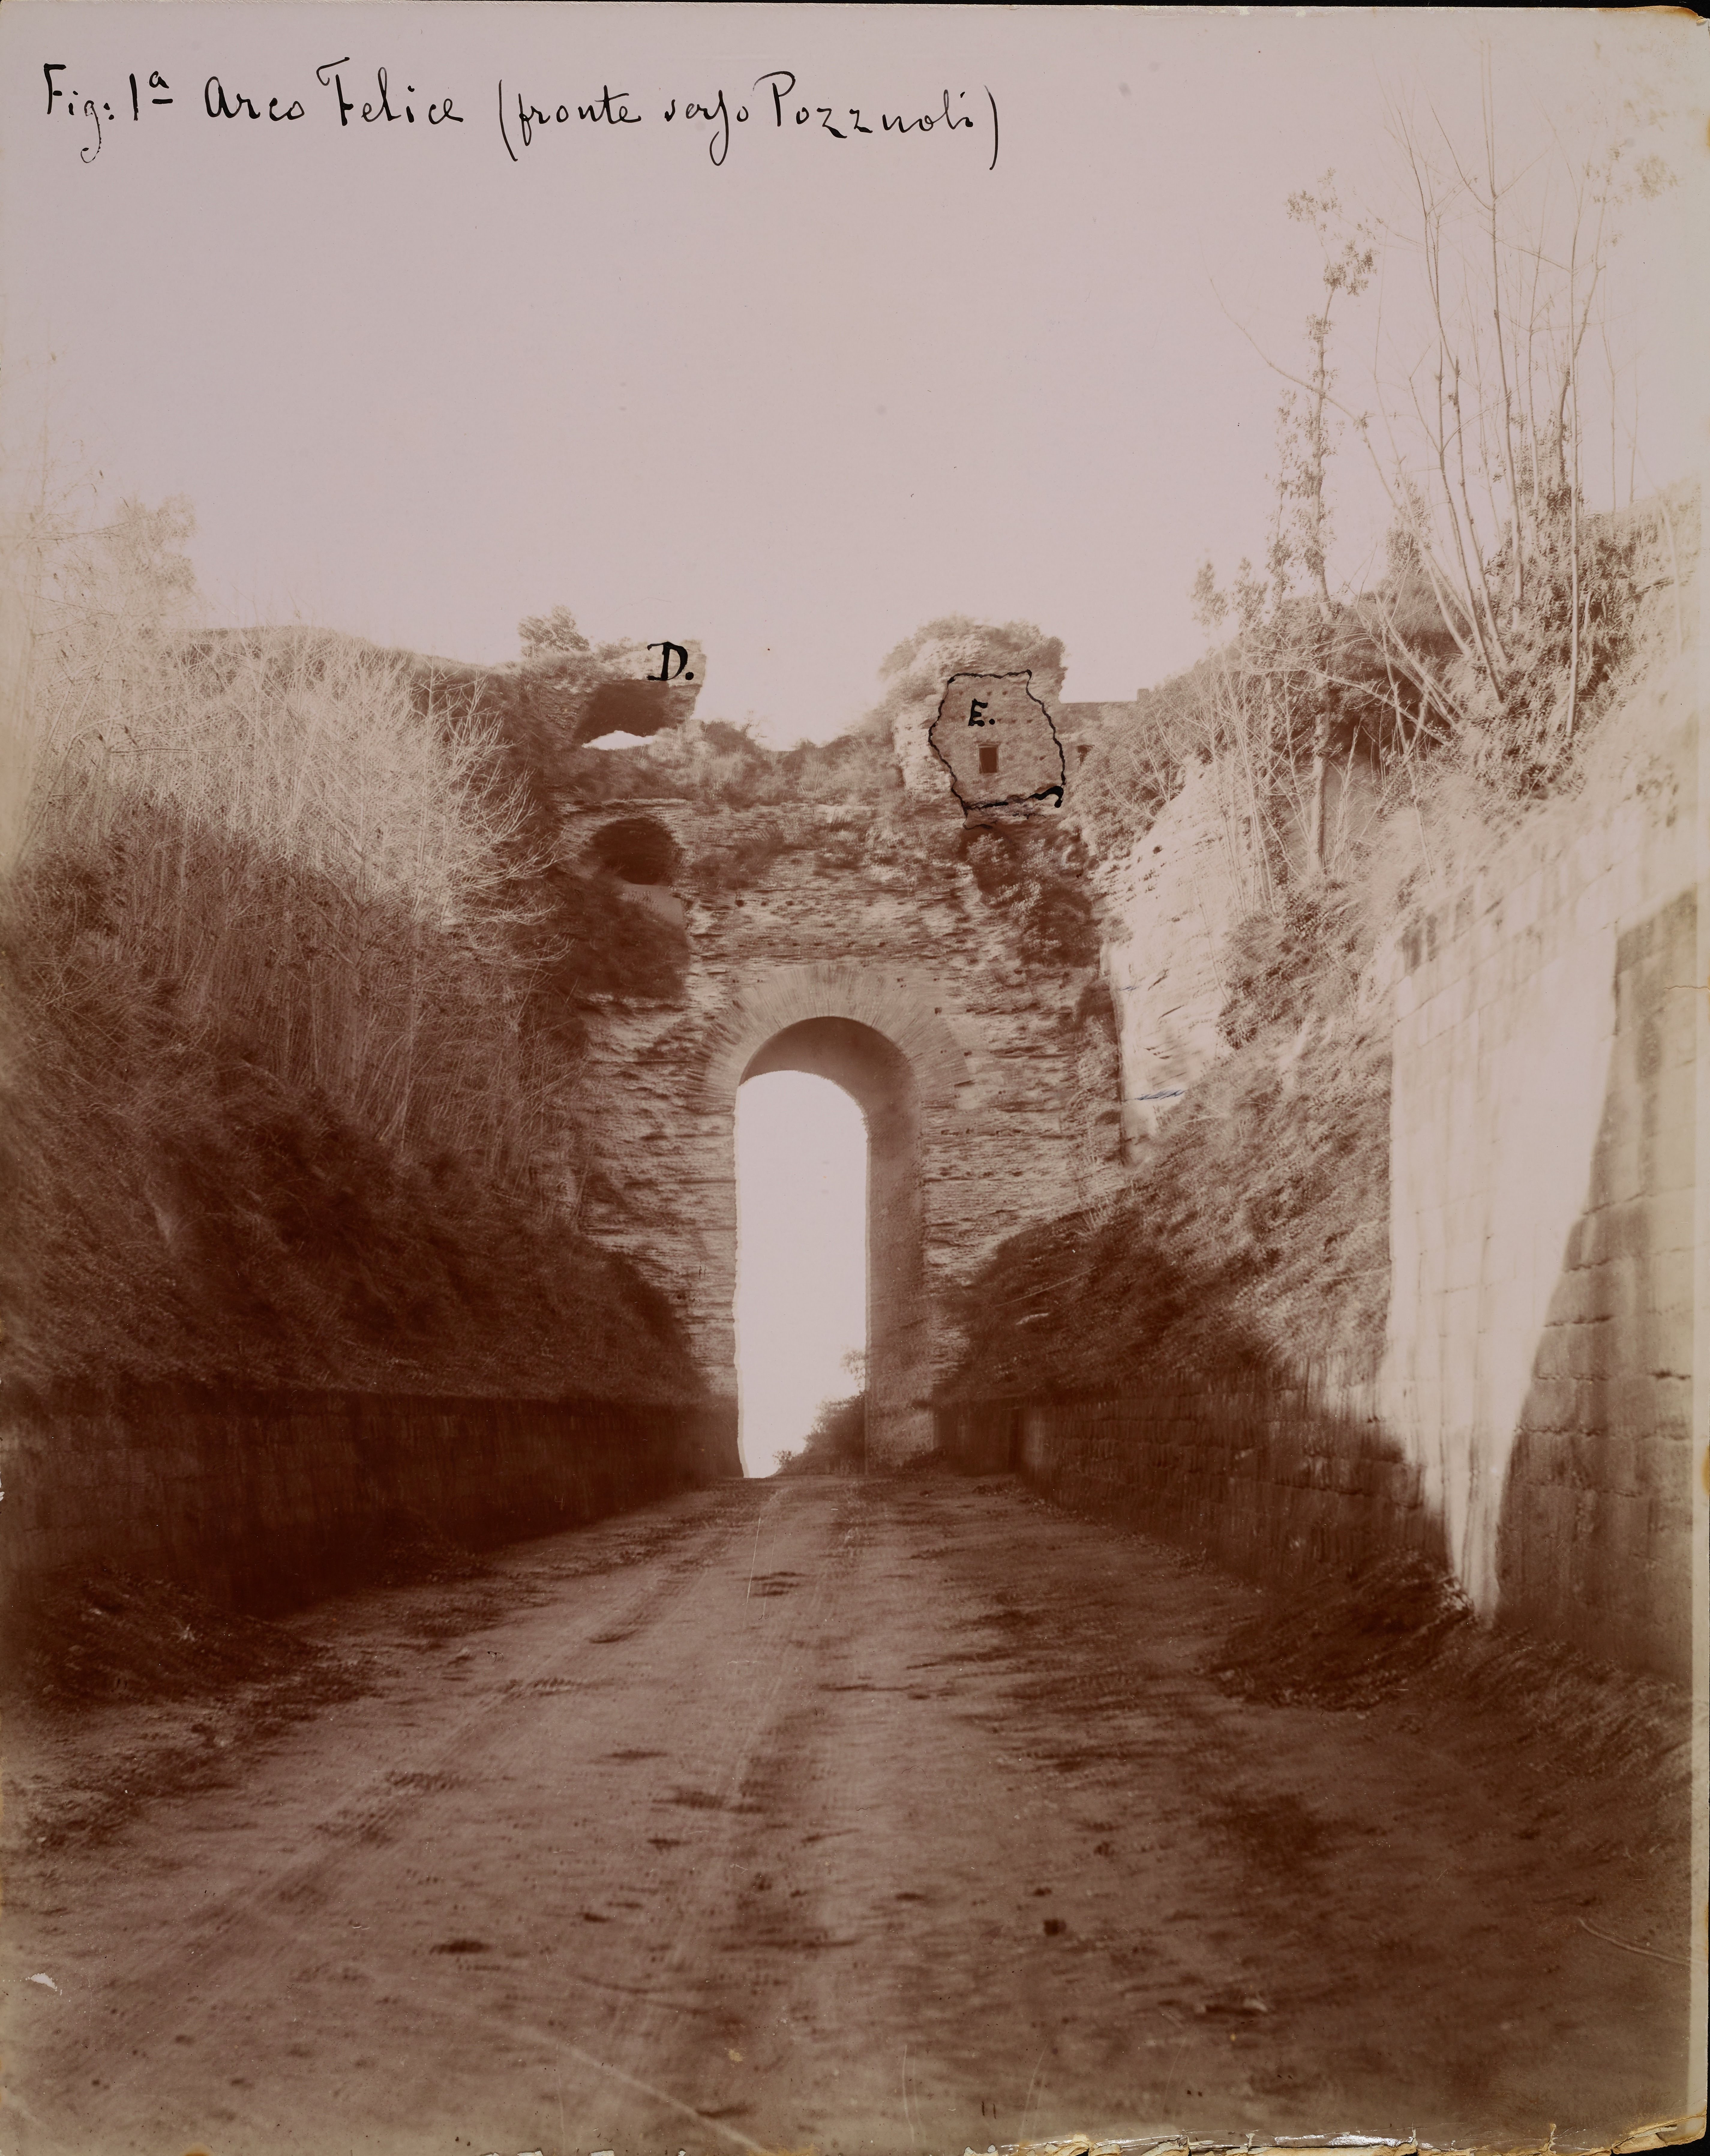 Rigoni, Adolfo, Pozzuoli, Arco Felice - Arco Felice, fronte verso Pozzuoli, 1896, aristotipo, MPI6014266